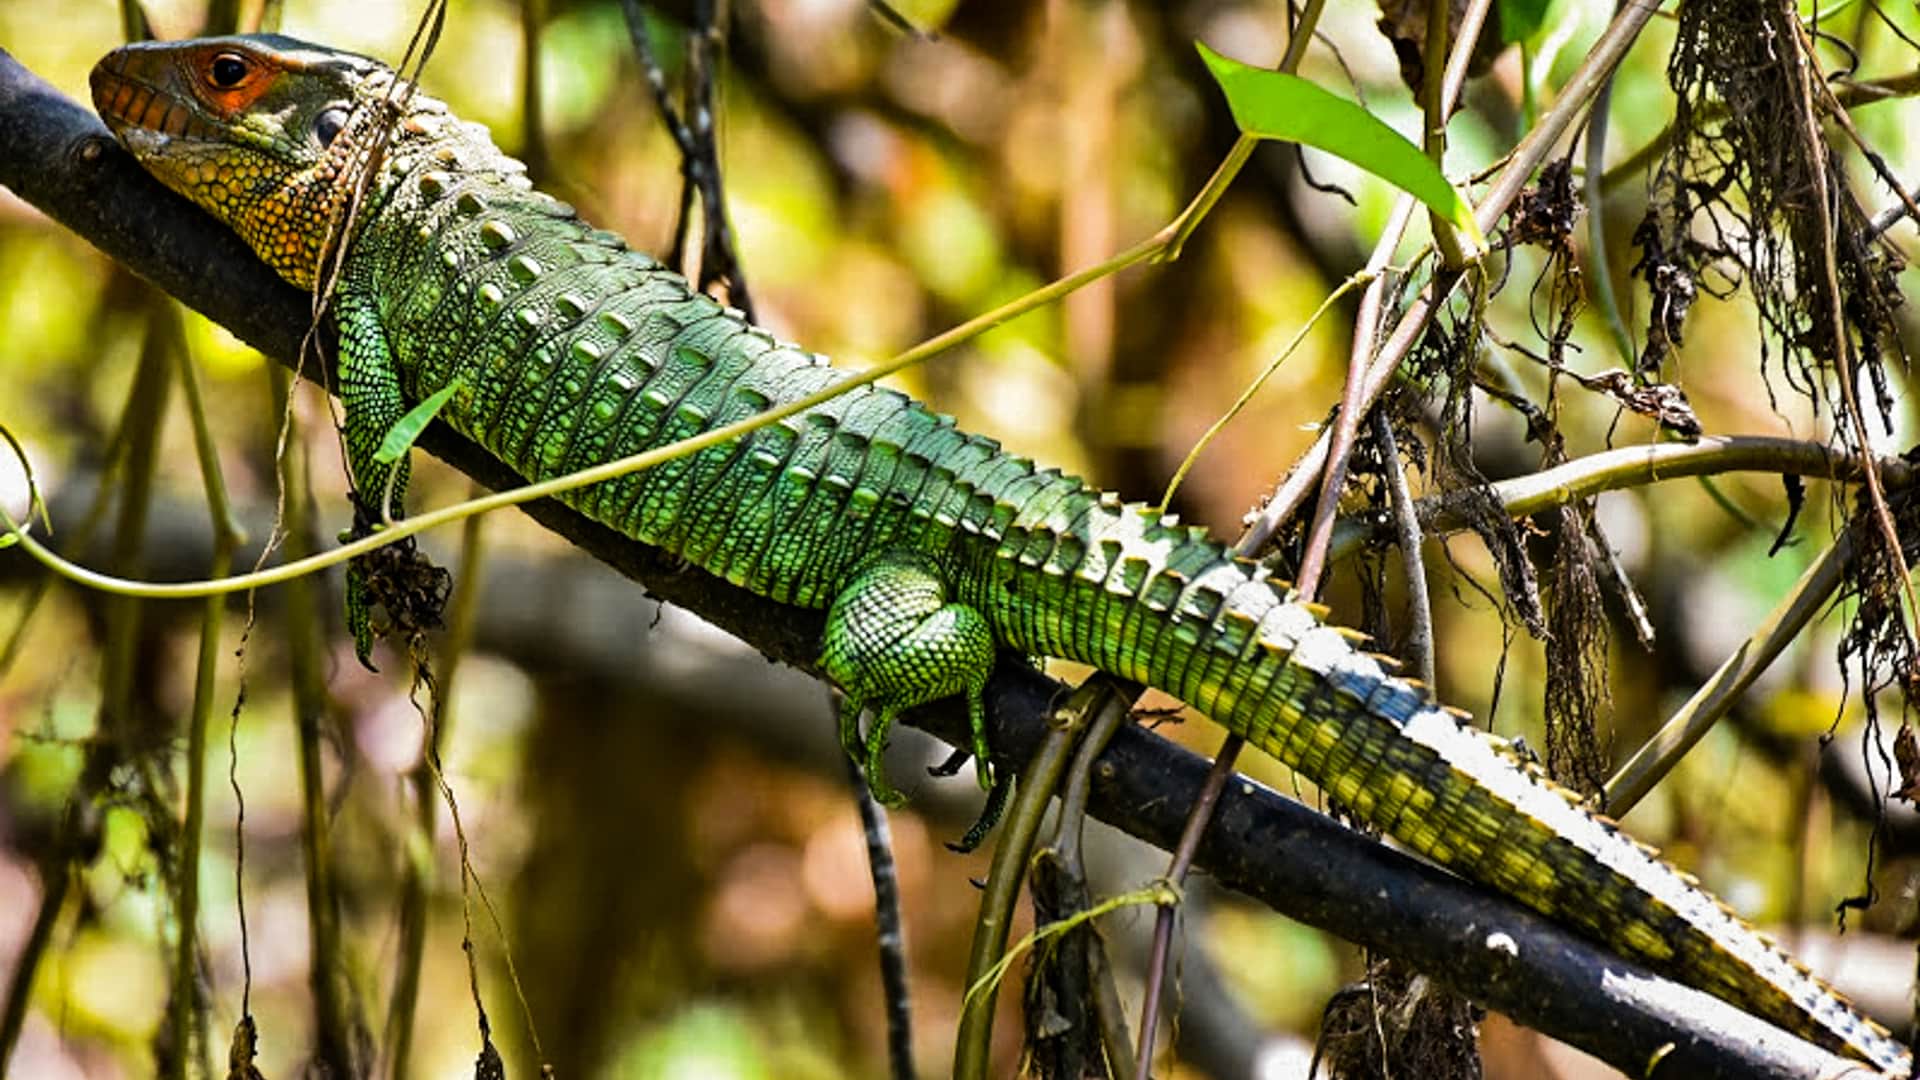 Caiman lizard in a branch | Responsible Travel Peru